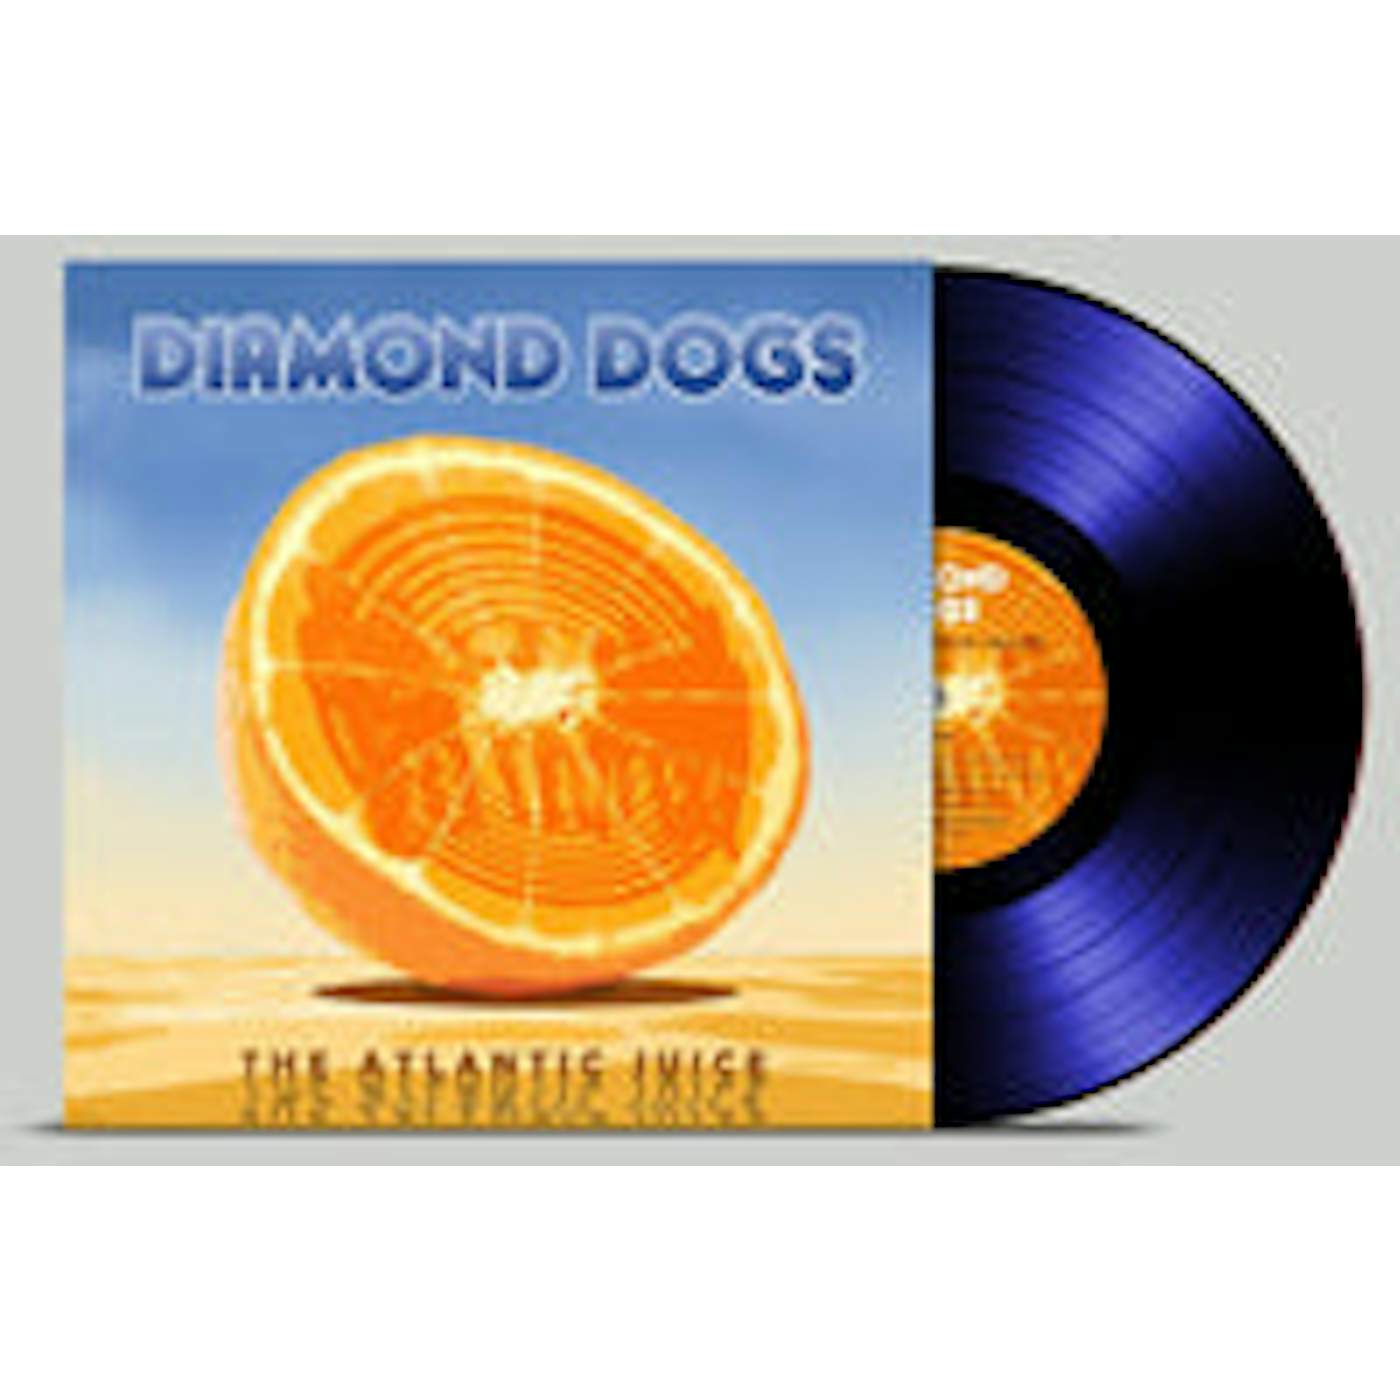 Diamond Dogs LP - Atlantic Juice (Vinyl)